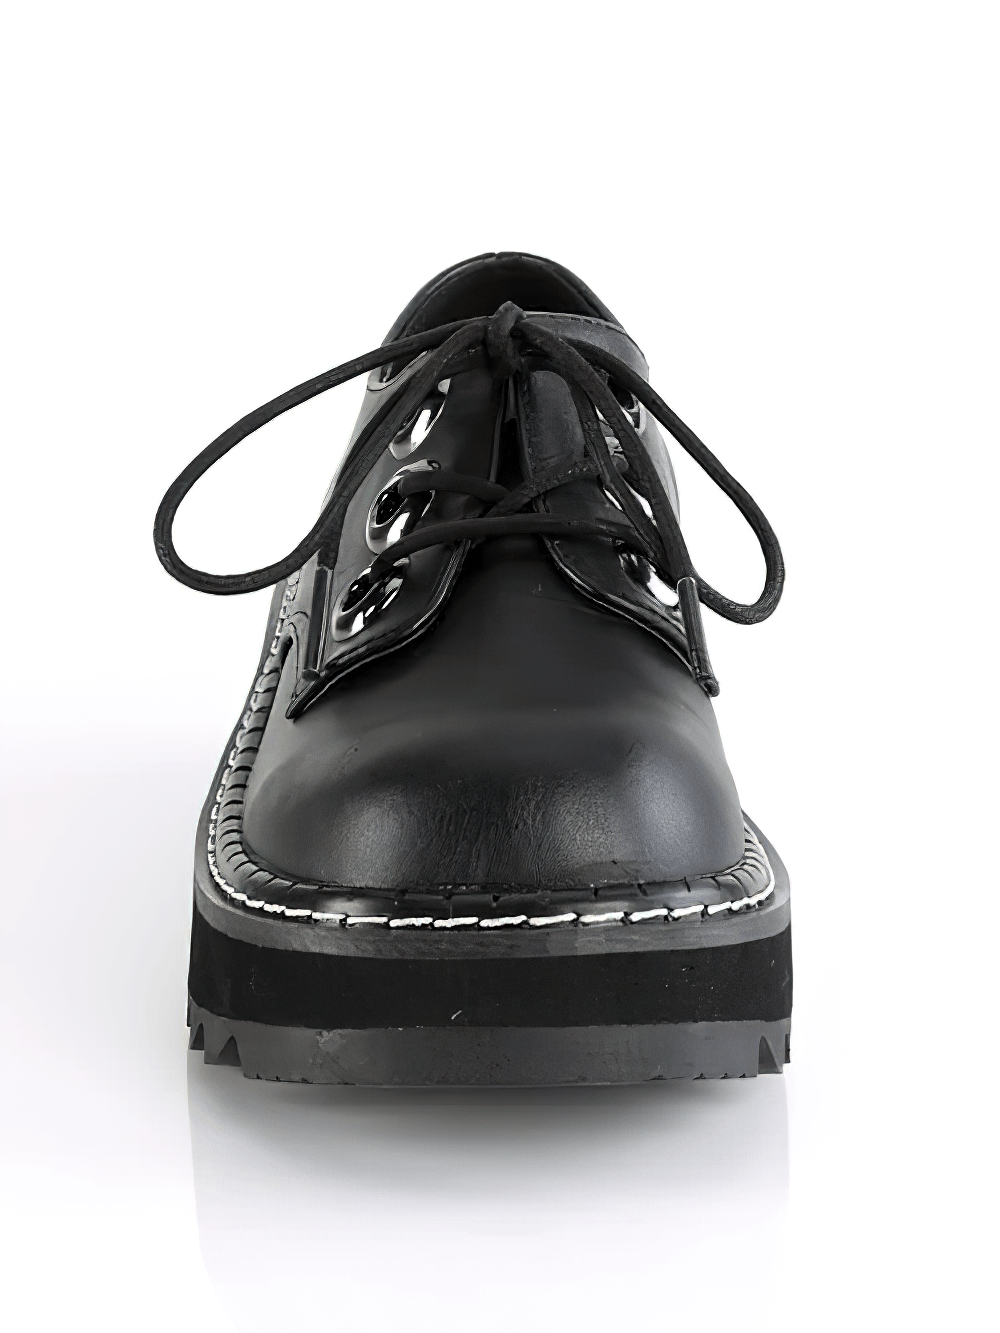 DEMONIA Grunge Style Vegan Leather Platform Derby Shoes